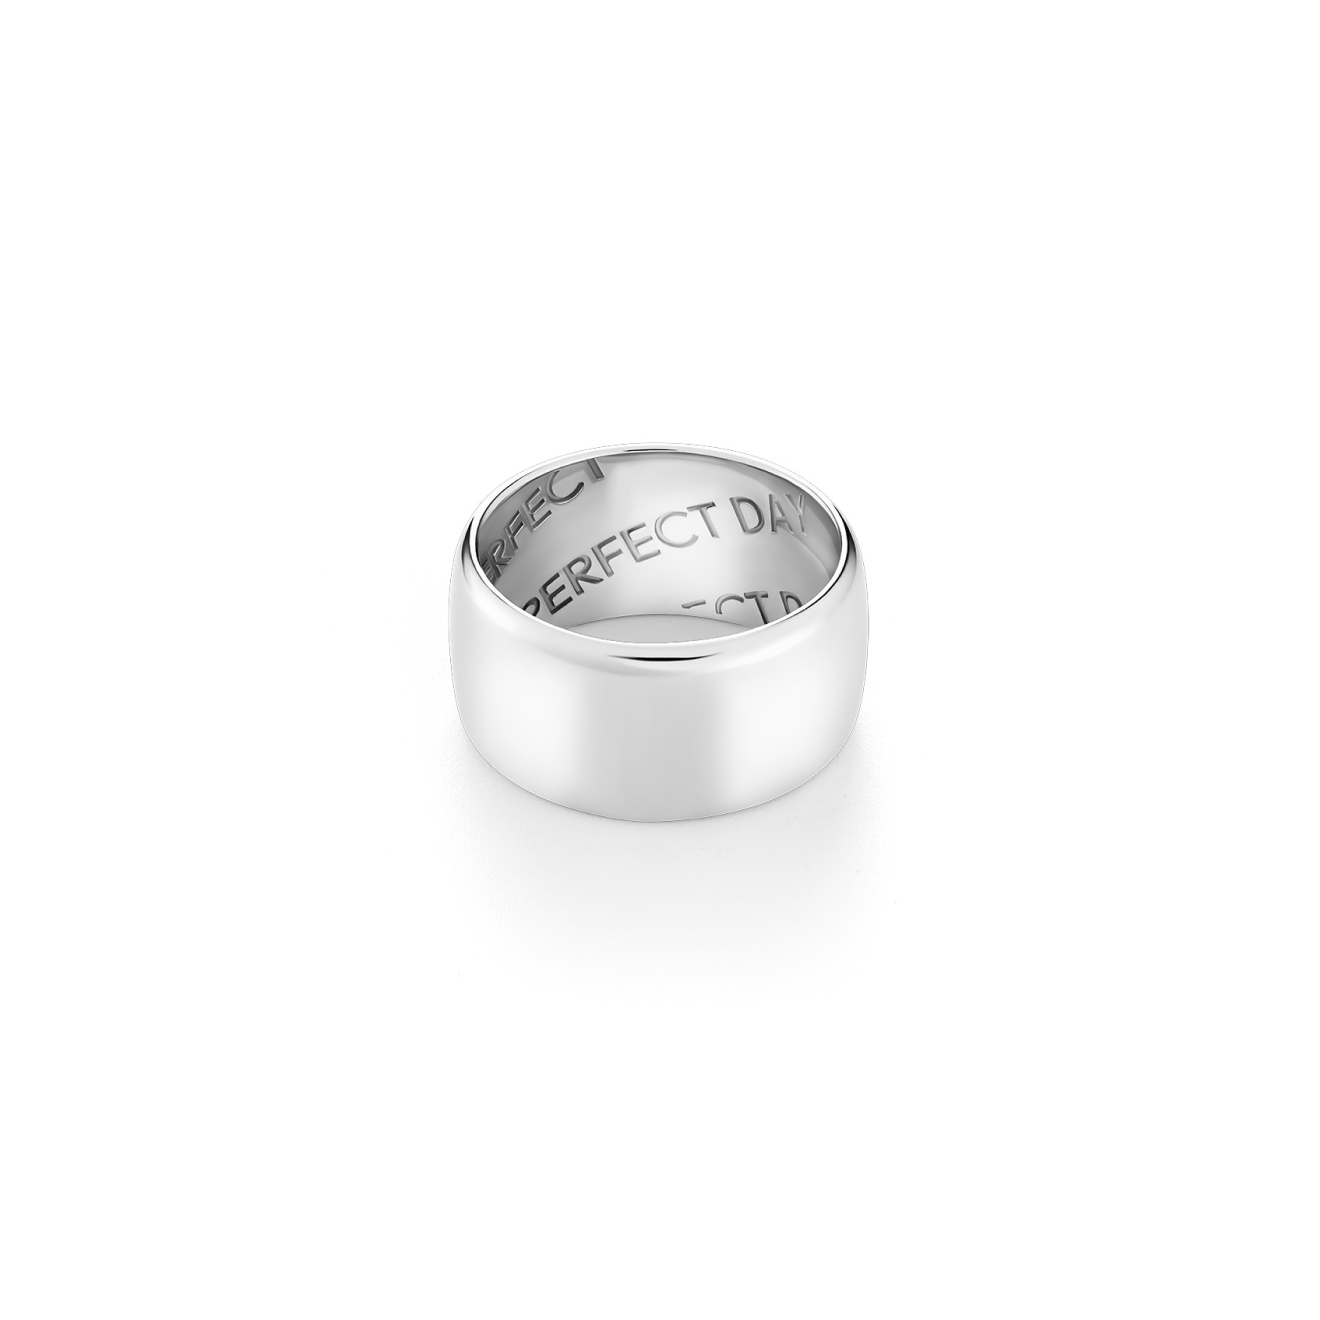 Avgvst Широкое кольцо из серебра PERFECT DAY avgvst кольцо complicated из серебра из коллекции paillettes